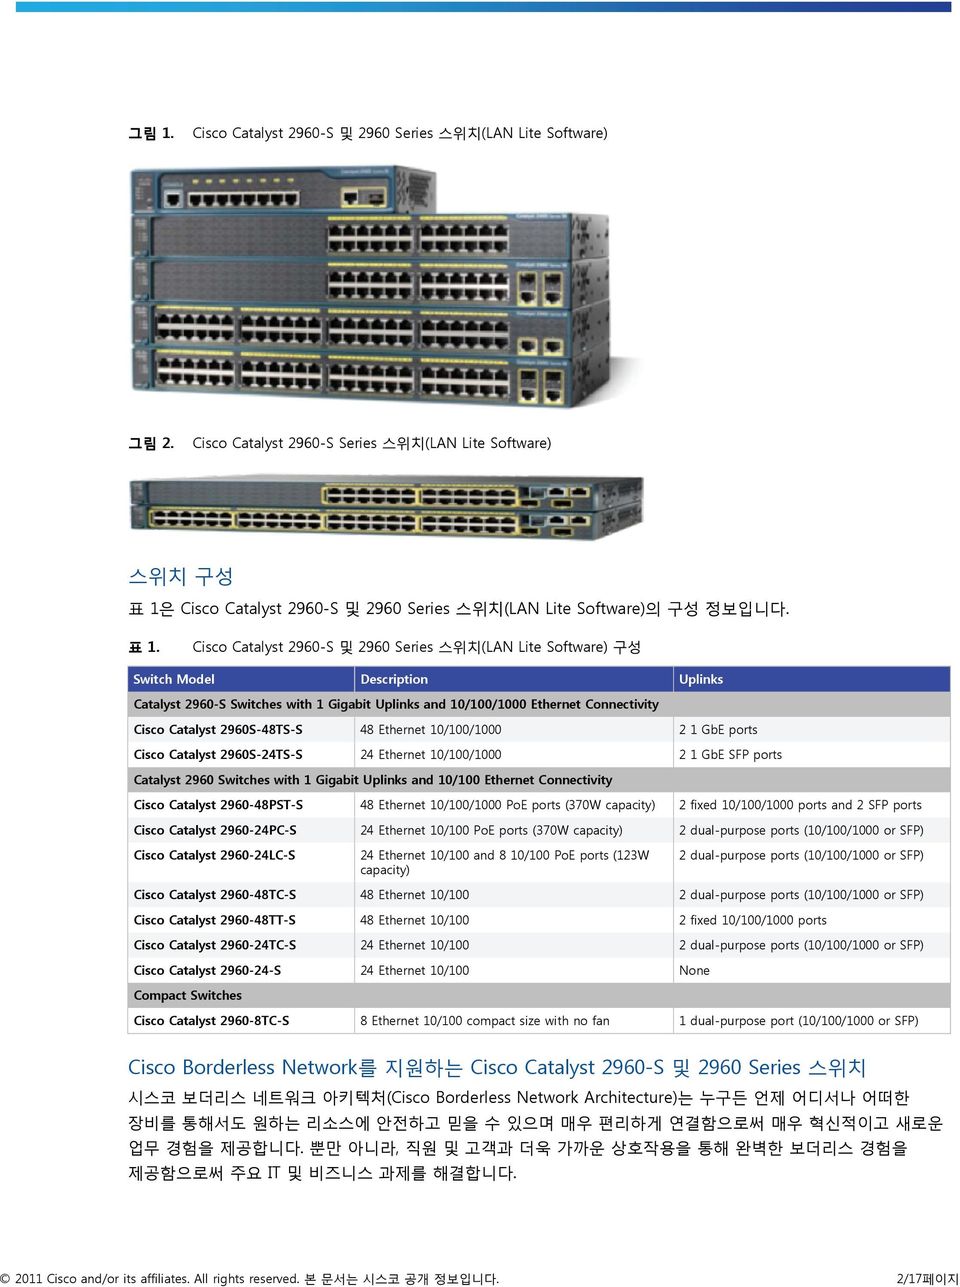 Cisco Catalyst 2960-S 및 2960 Series 스위치(LAN Lite Software)의 구성 정보입니다. 표 1.